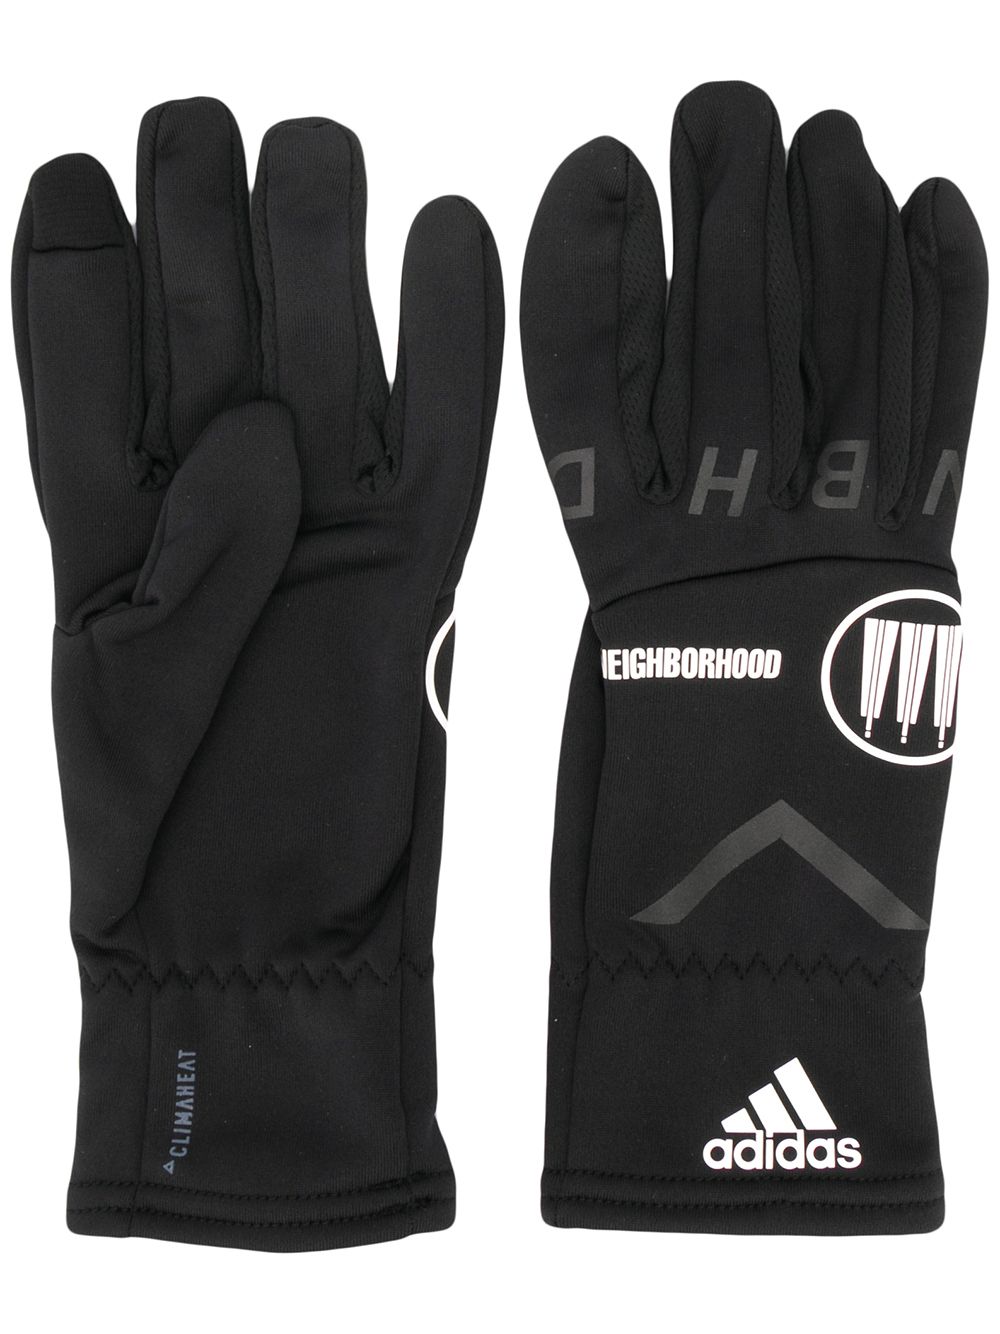 фото Adidas перчатки с логотипом